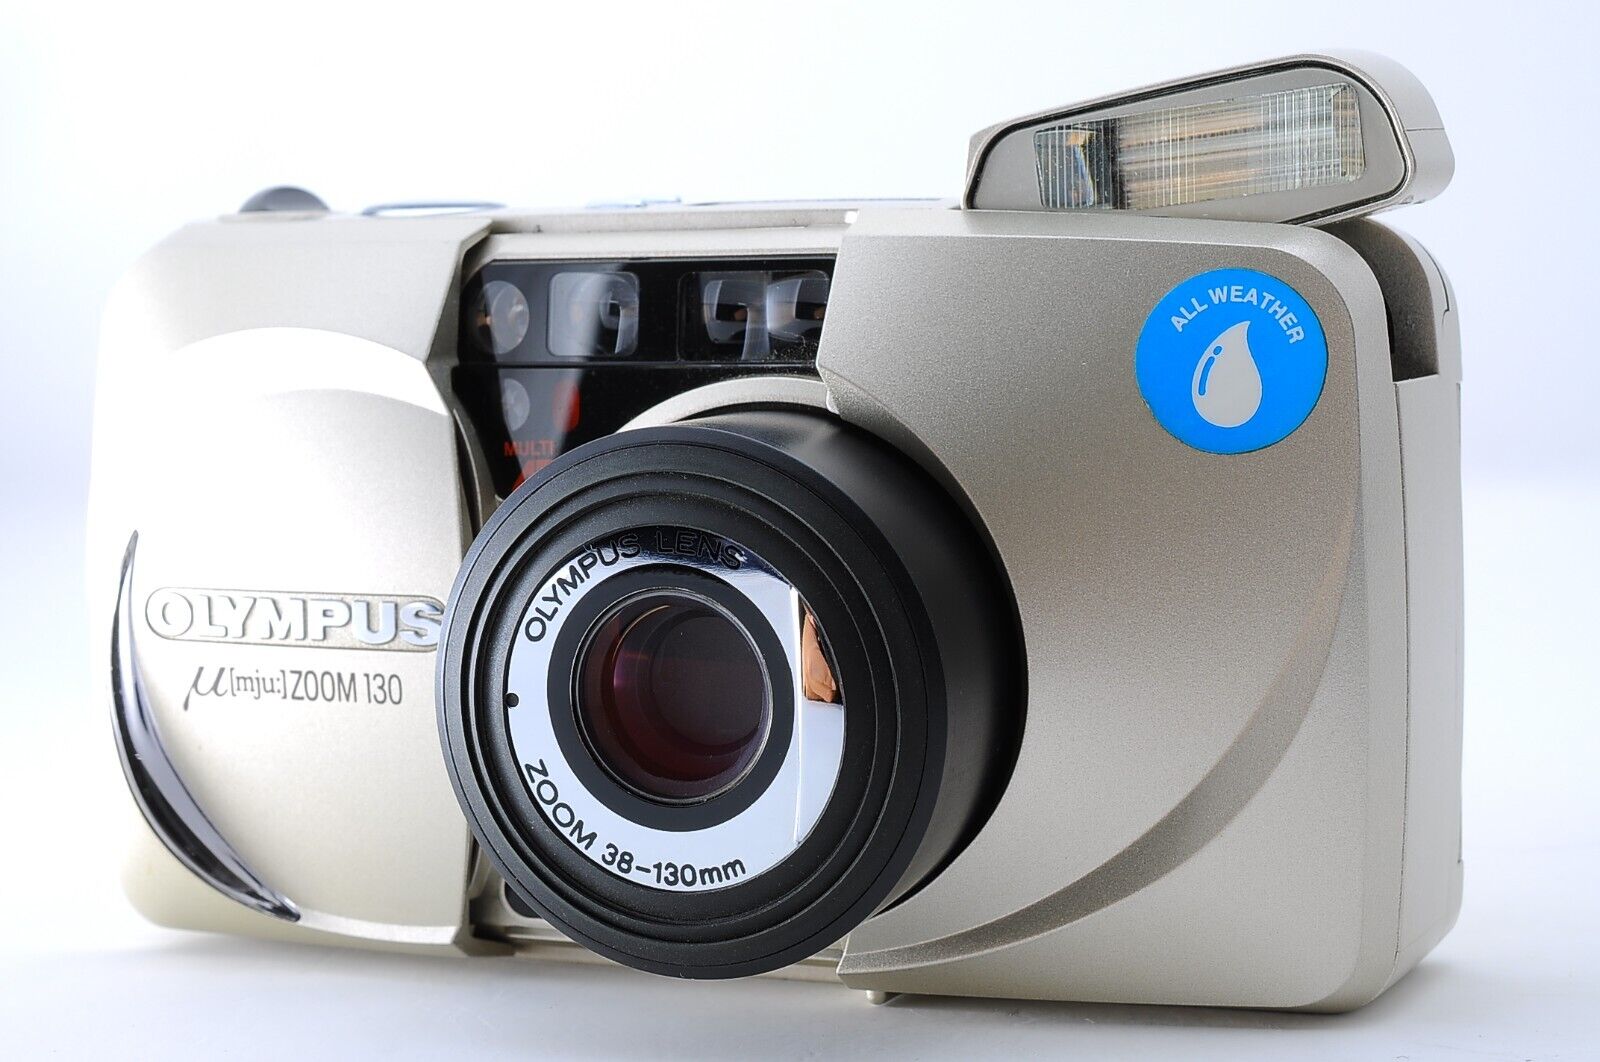 [Near Mint] Olympus mju ZOOM 130 Gold 35mm Point & Shoot Film Camera from JAPAN